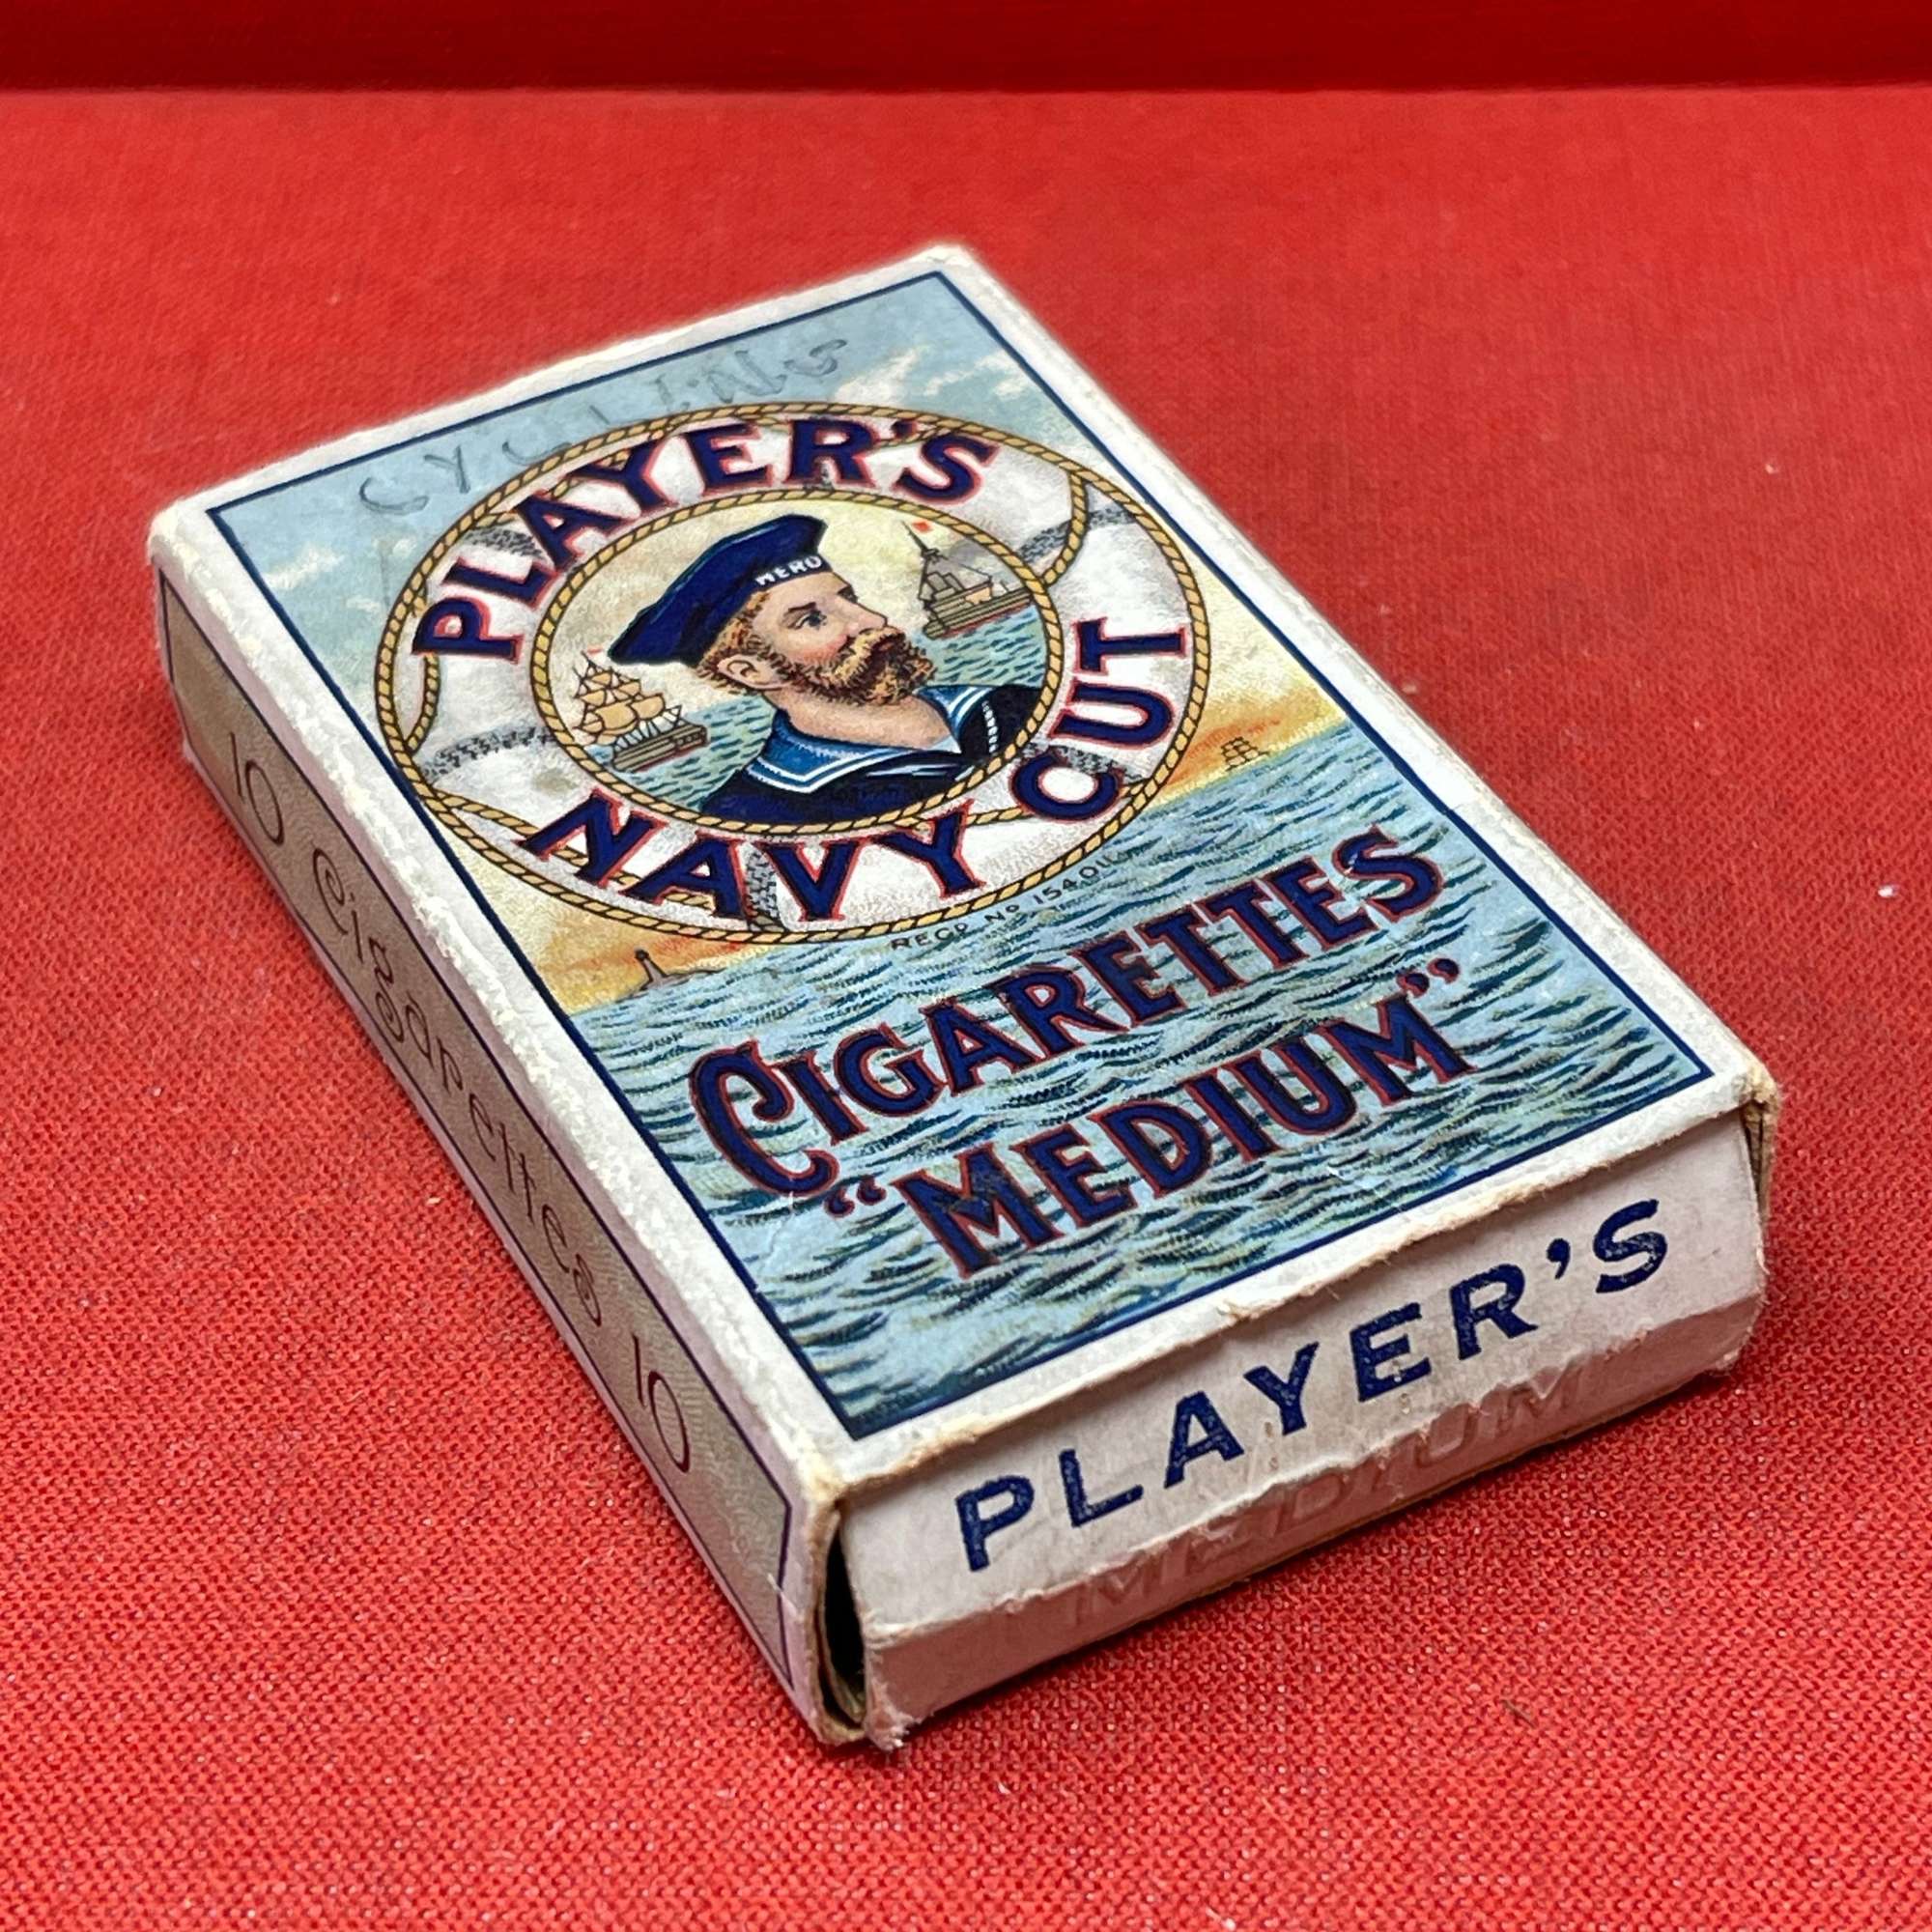 Players Navy Cut cigarettes medium 10 pack